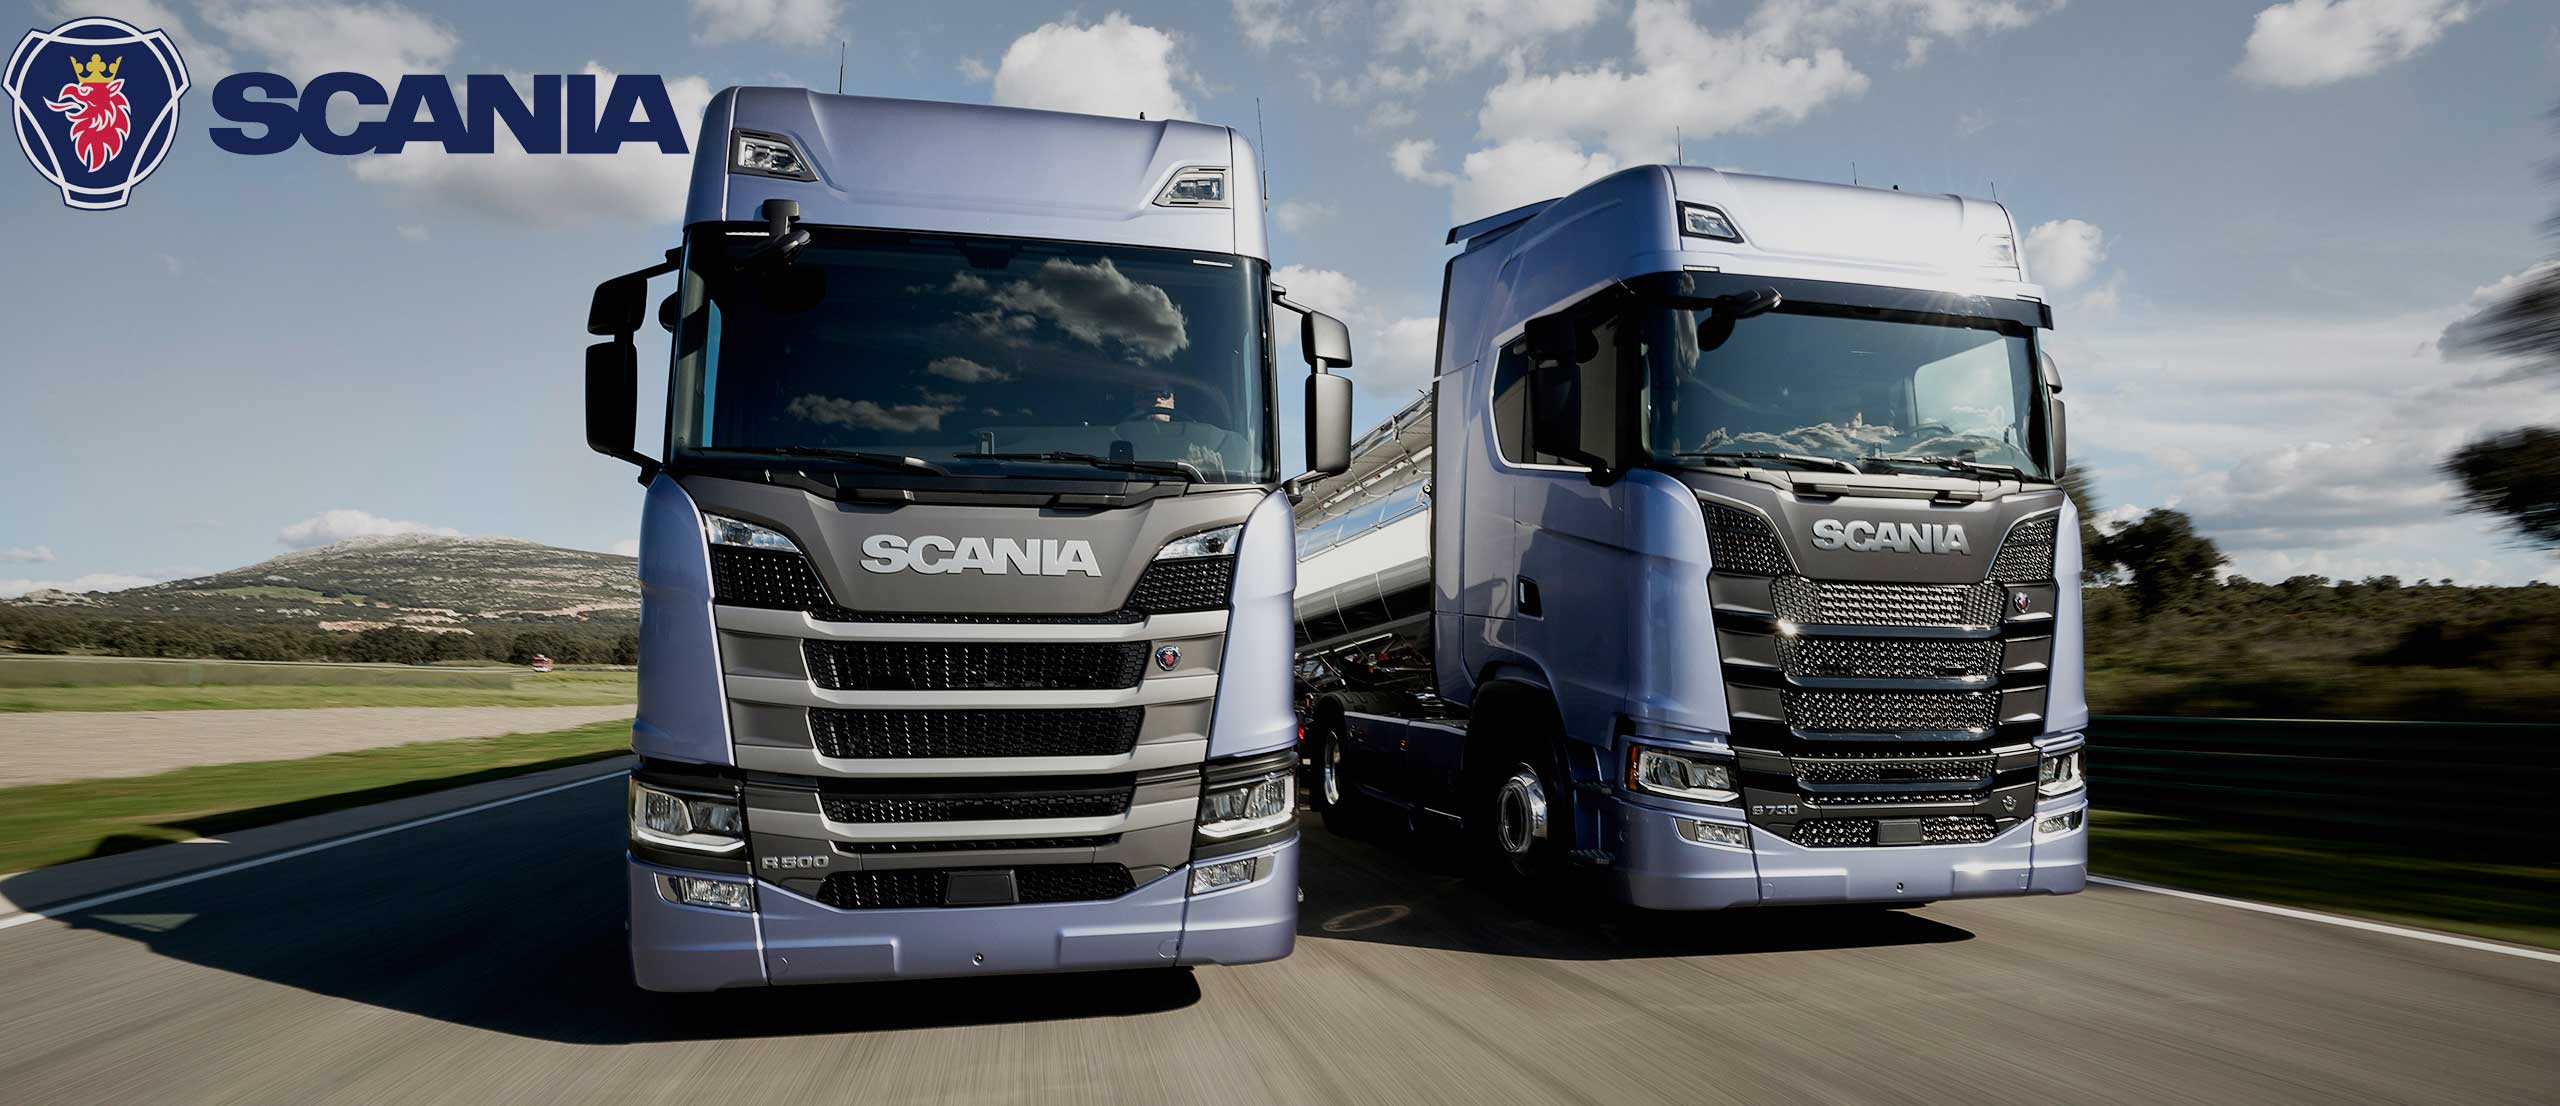 Scania Series Trucks